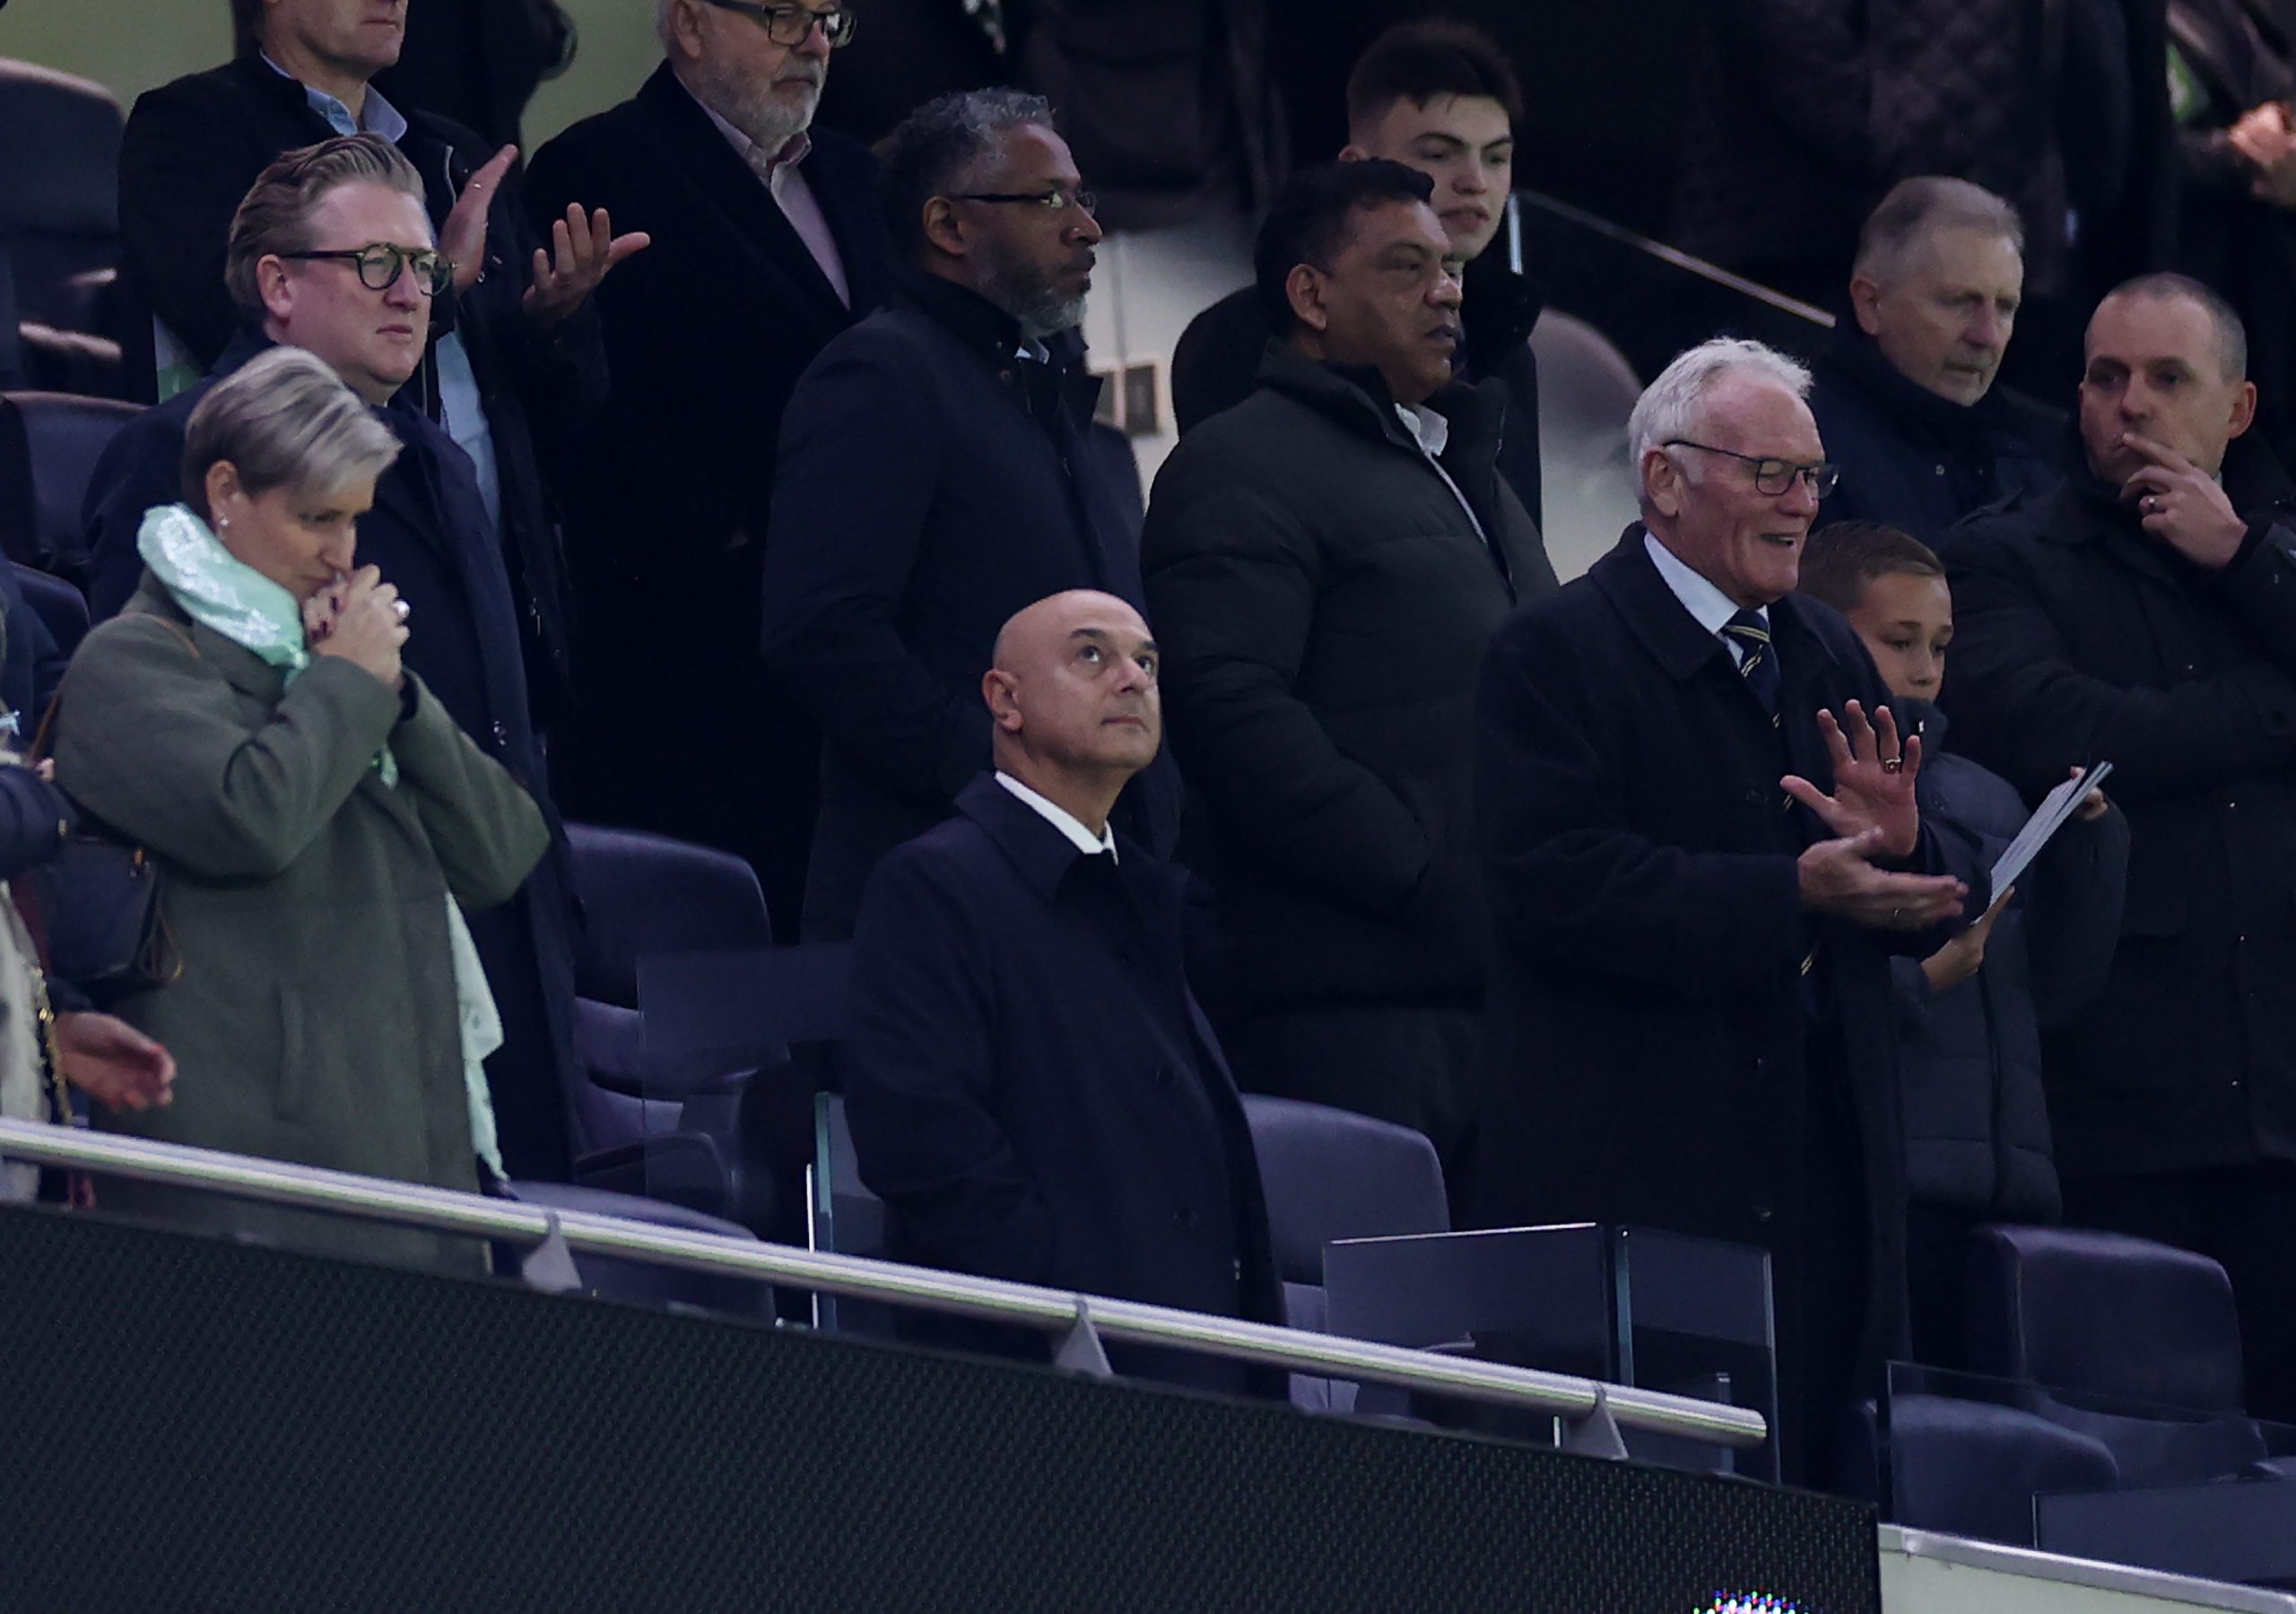 Financial Masterstroke? Daniel Levy Stadium deal fuels Tottenham's Growth